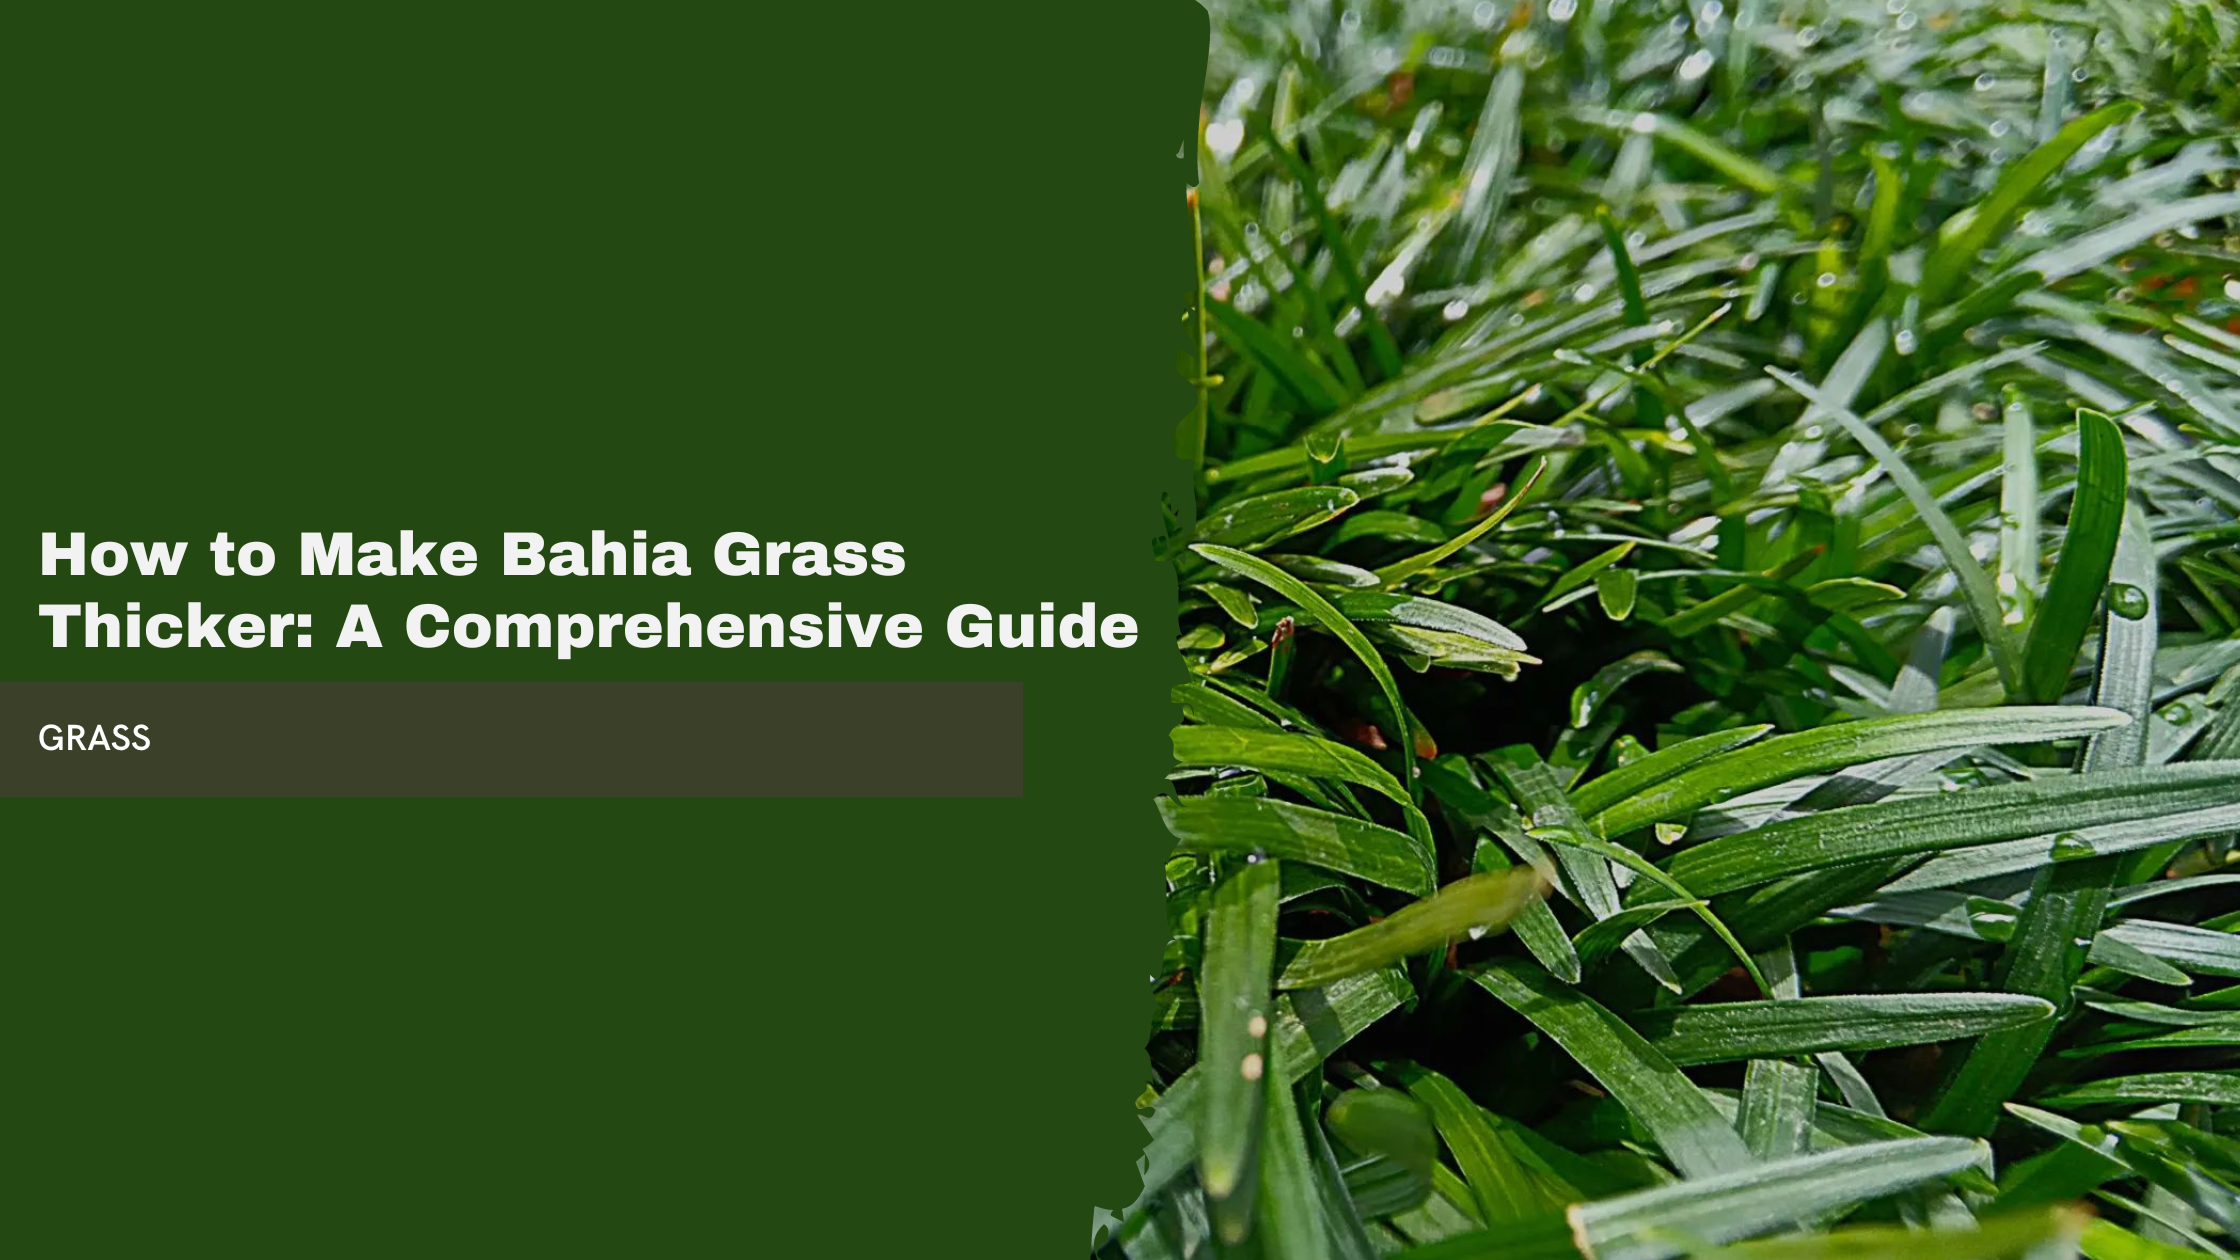 How to Make Bahia Grass Thicker